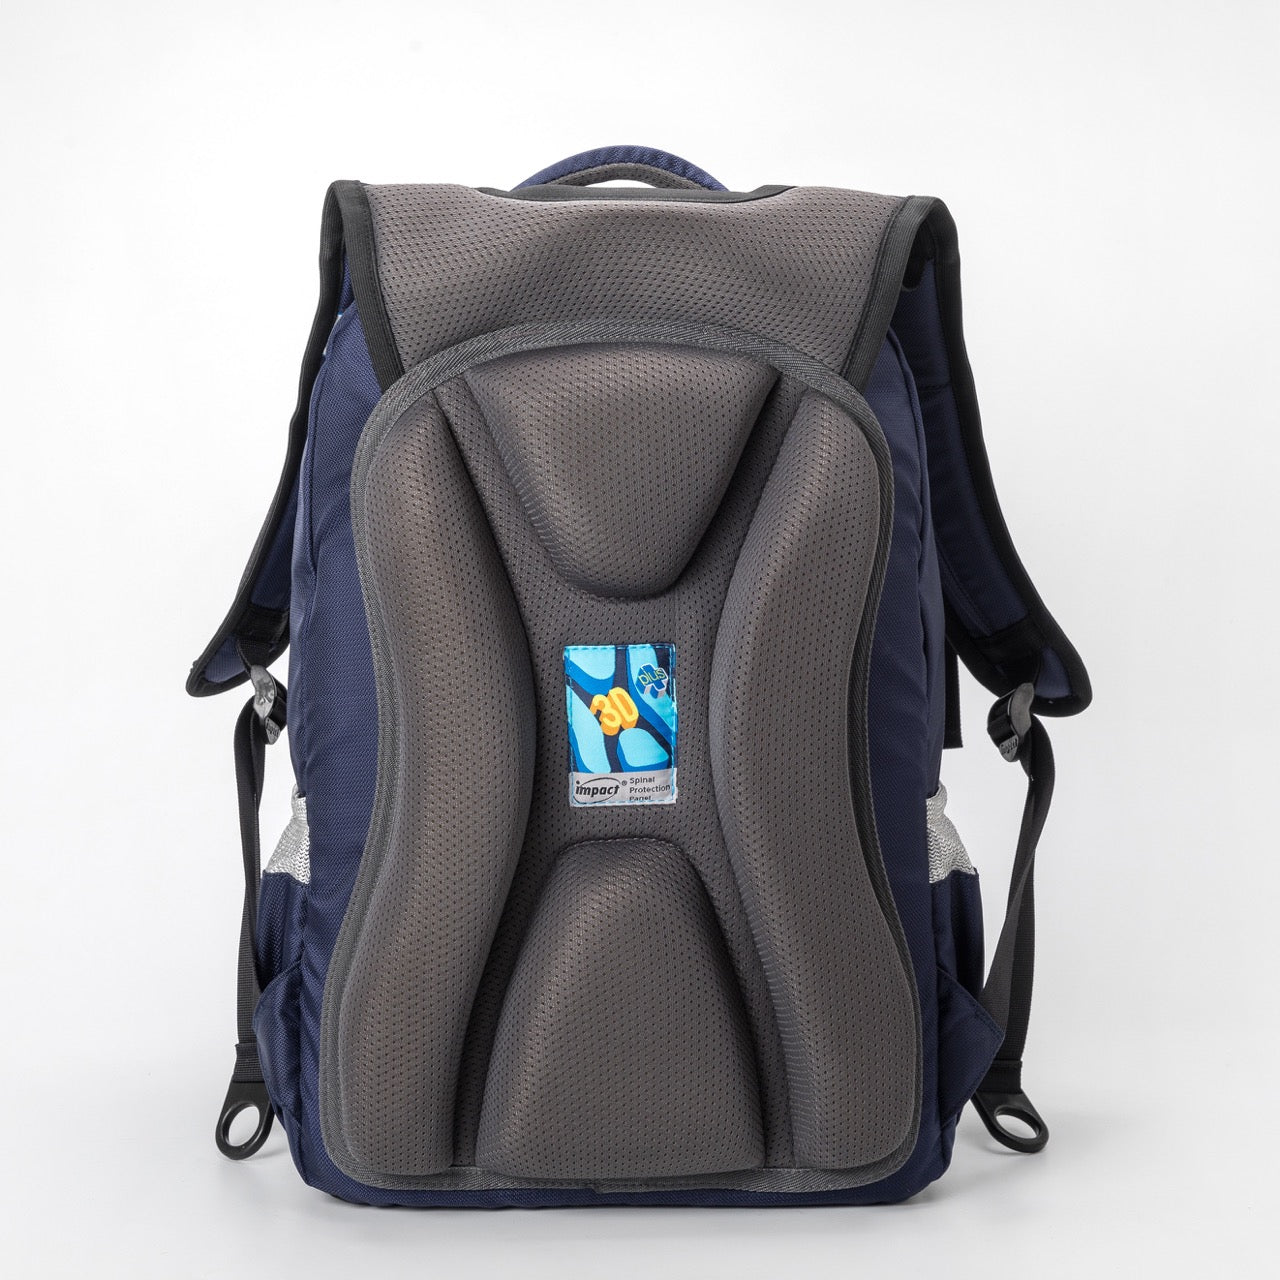 Impact School Bag IM-00385 - Ergo-Comfort Spinal Support Backpack